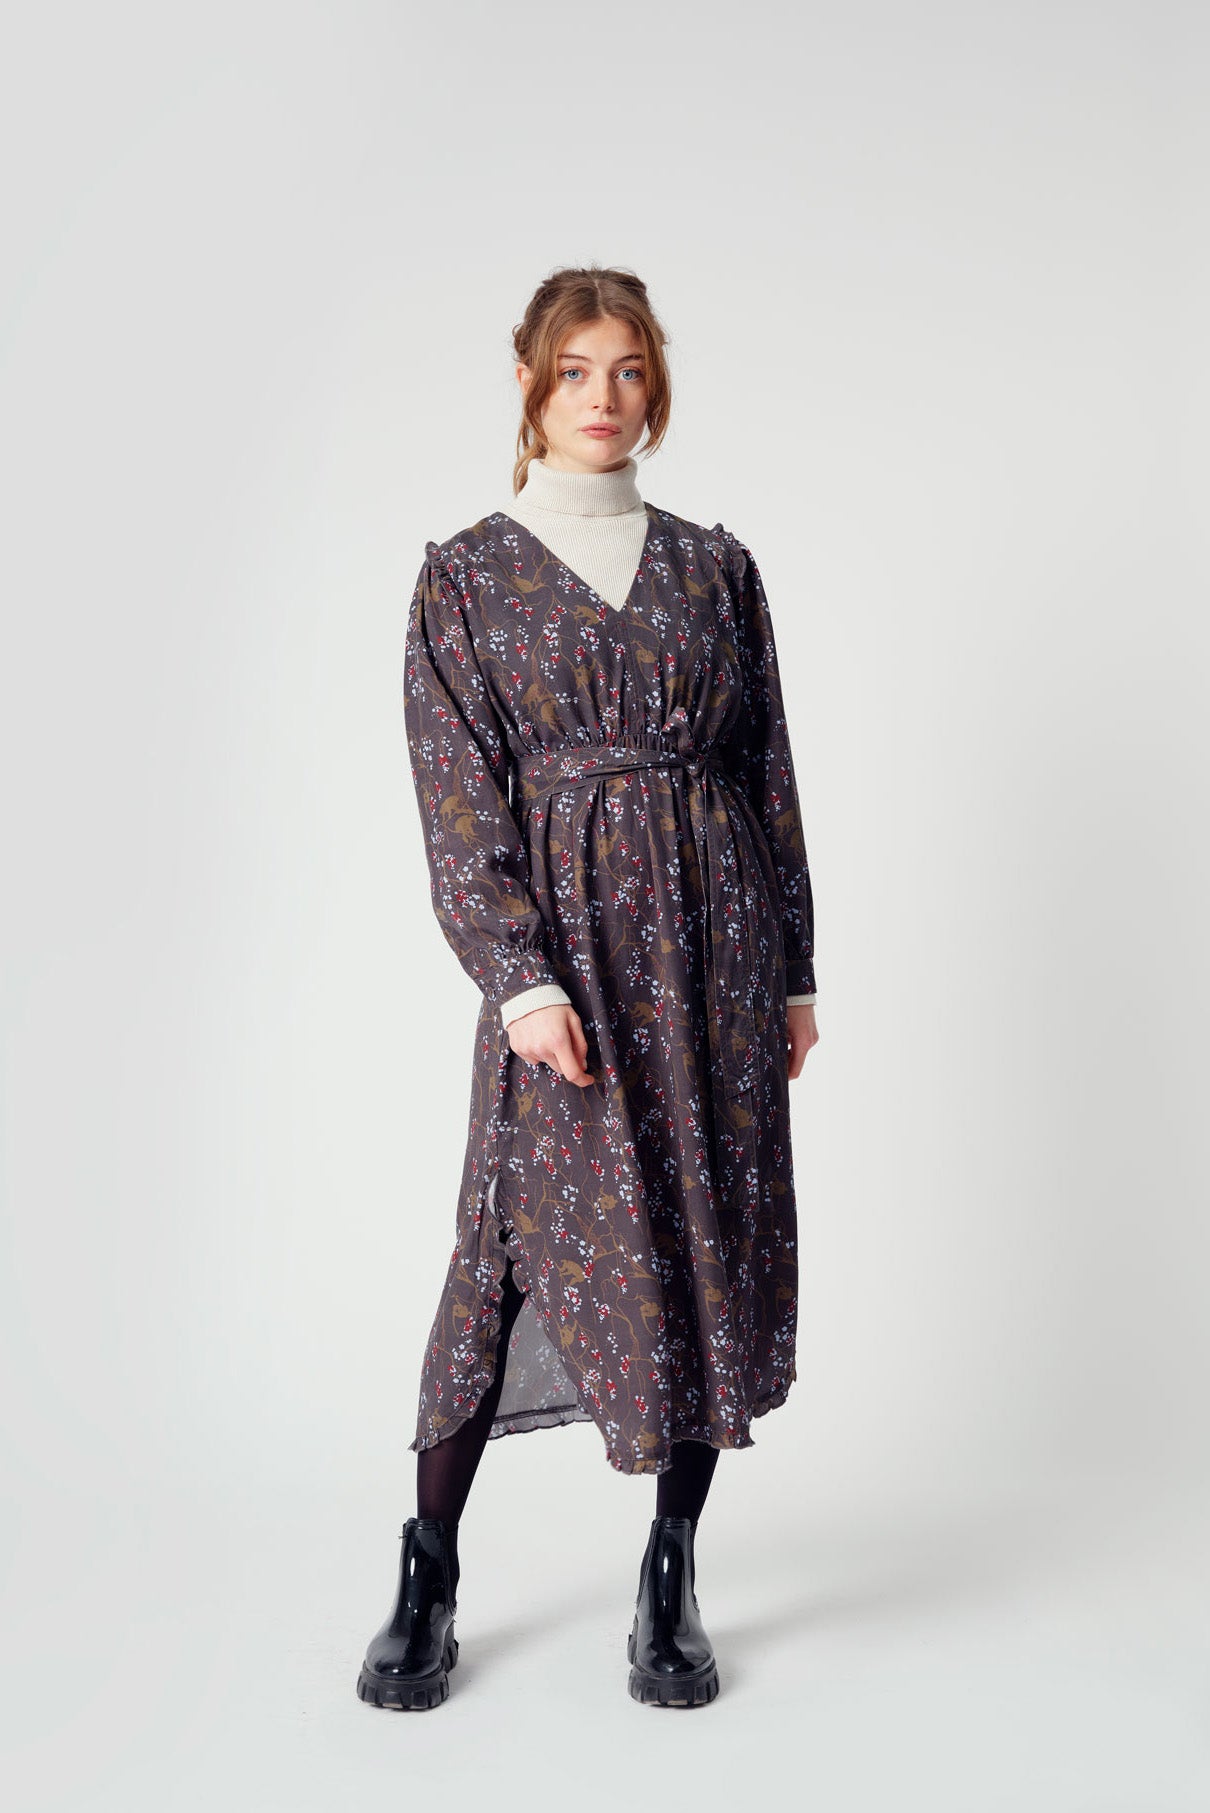 ALINA Womens Tencel Winter Jungle Ivy Dress, Size 2 / UK 10 / EUR 38